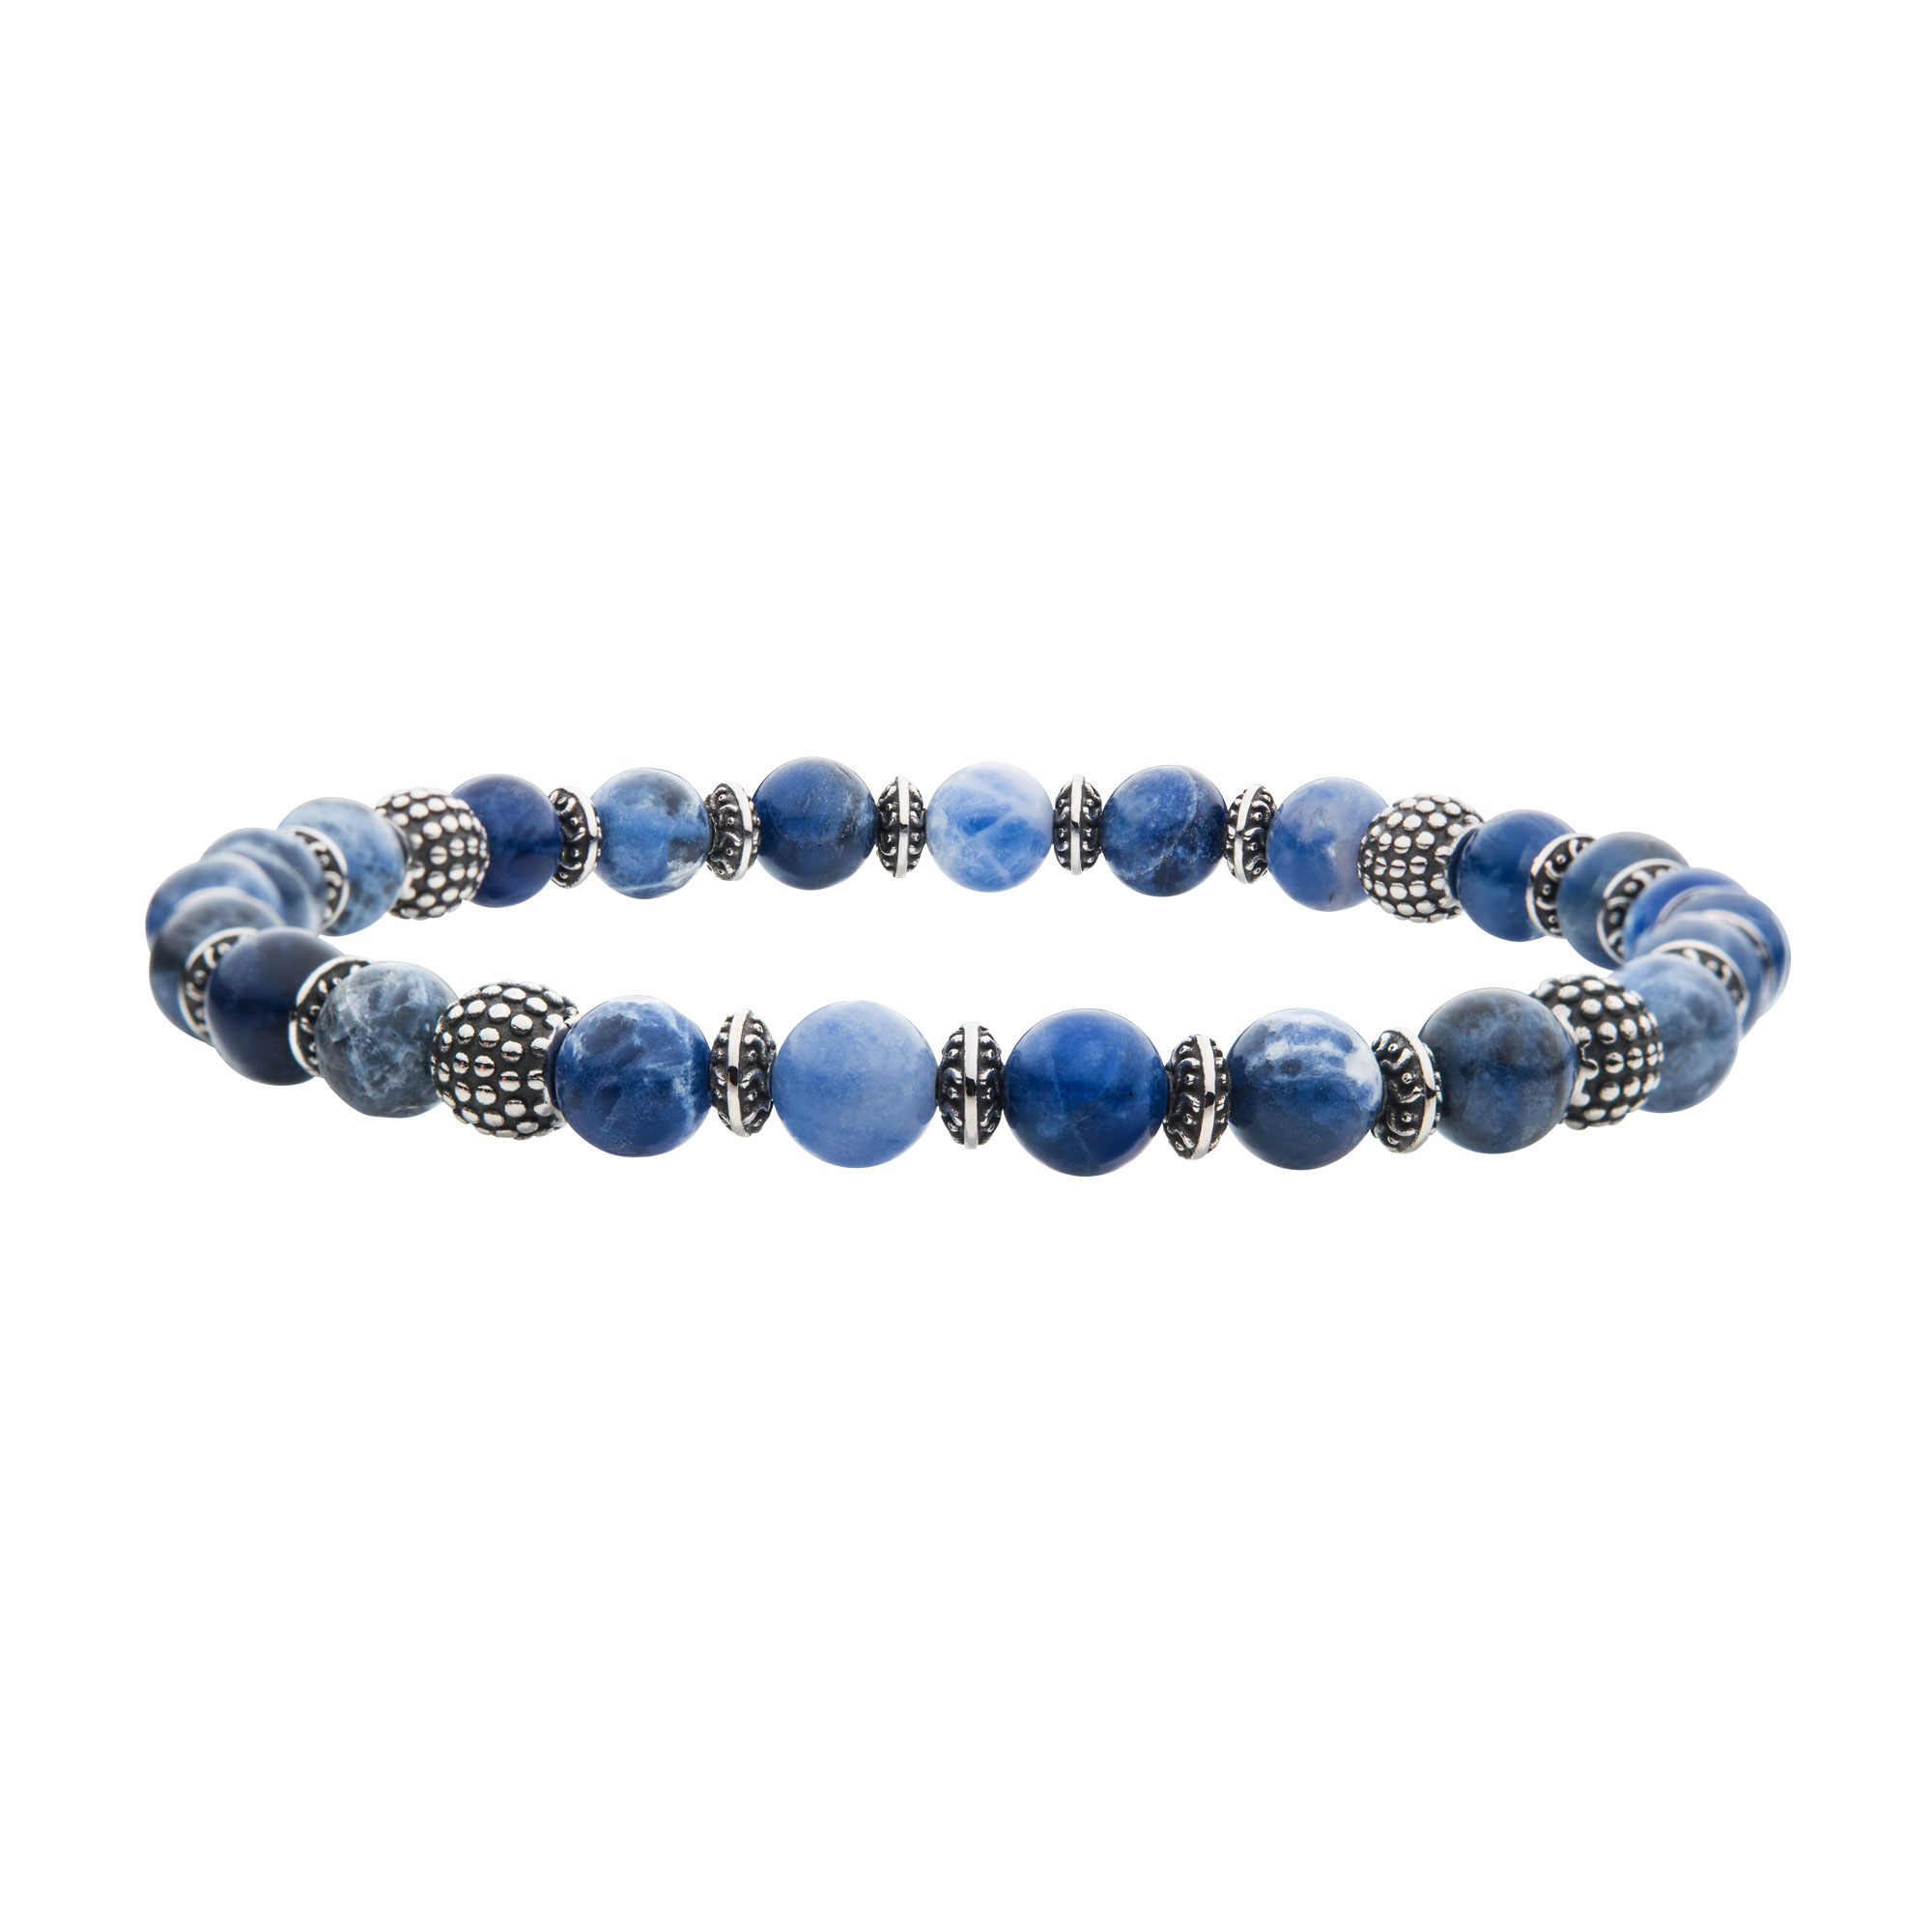 Blue Sodalite Stones with Black Oxidized Beads Bracelet Ritzi Jewelers Brookville, IN